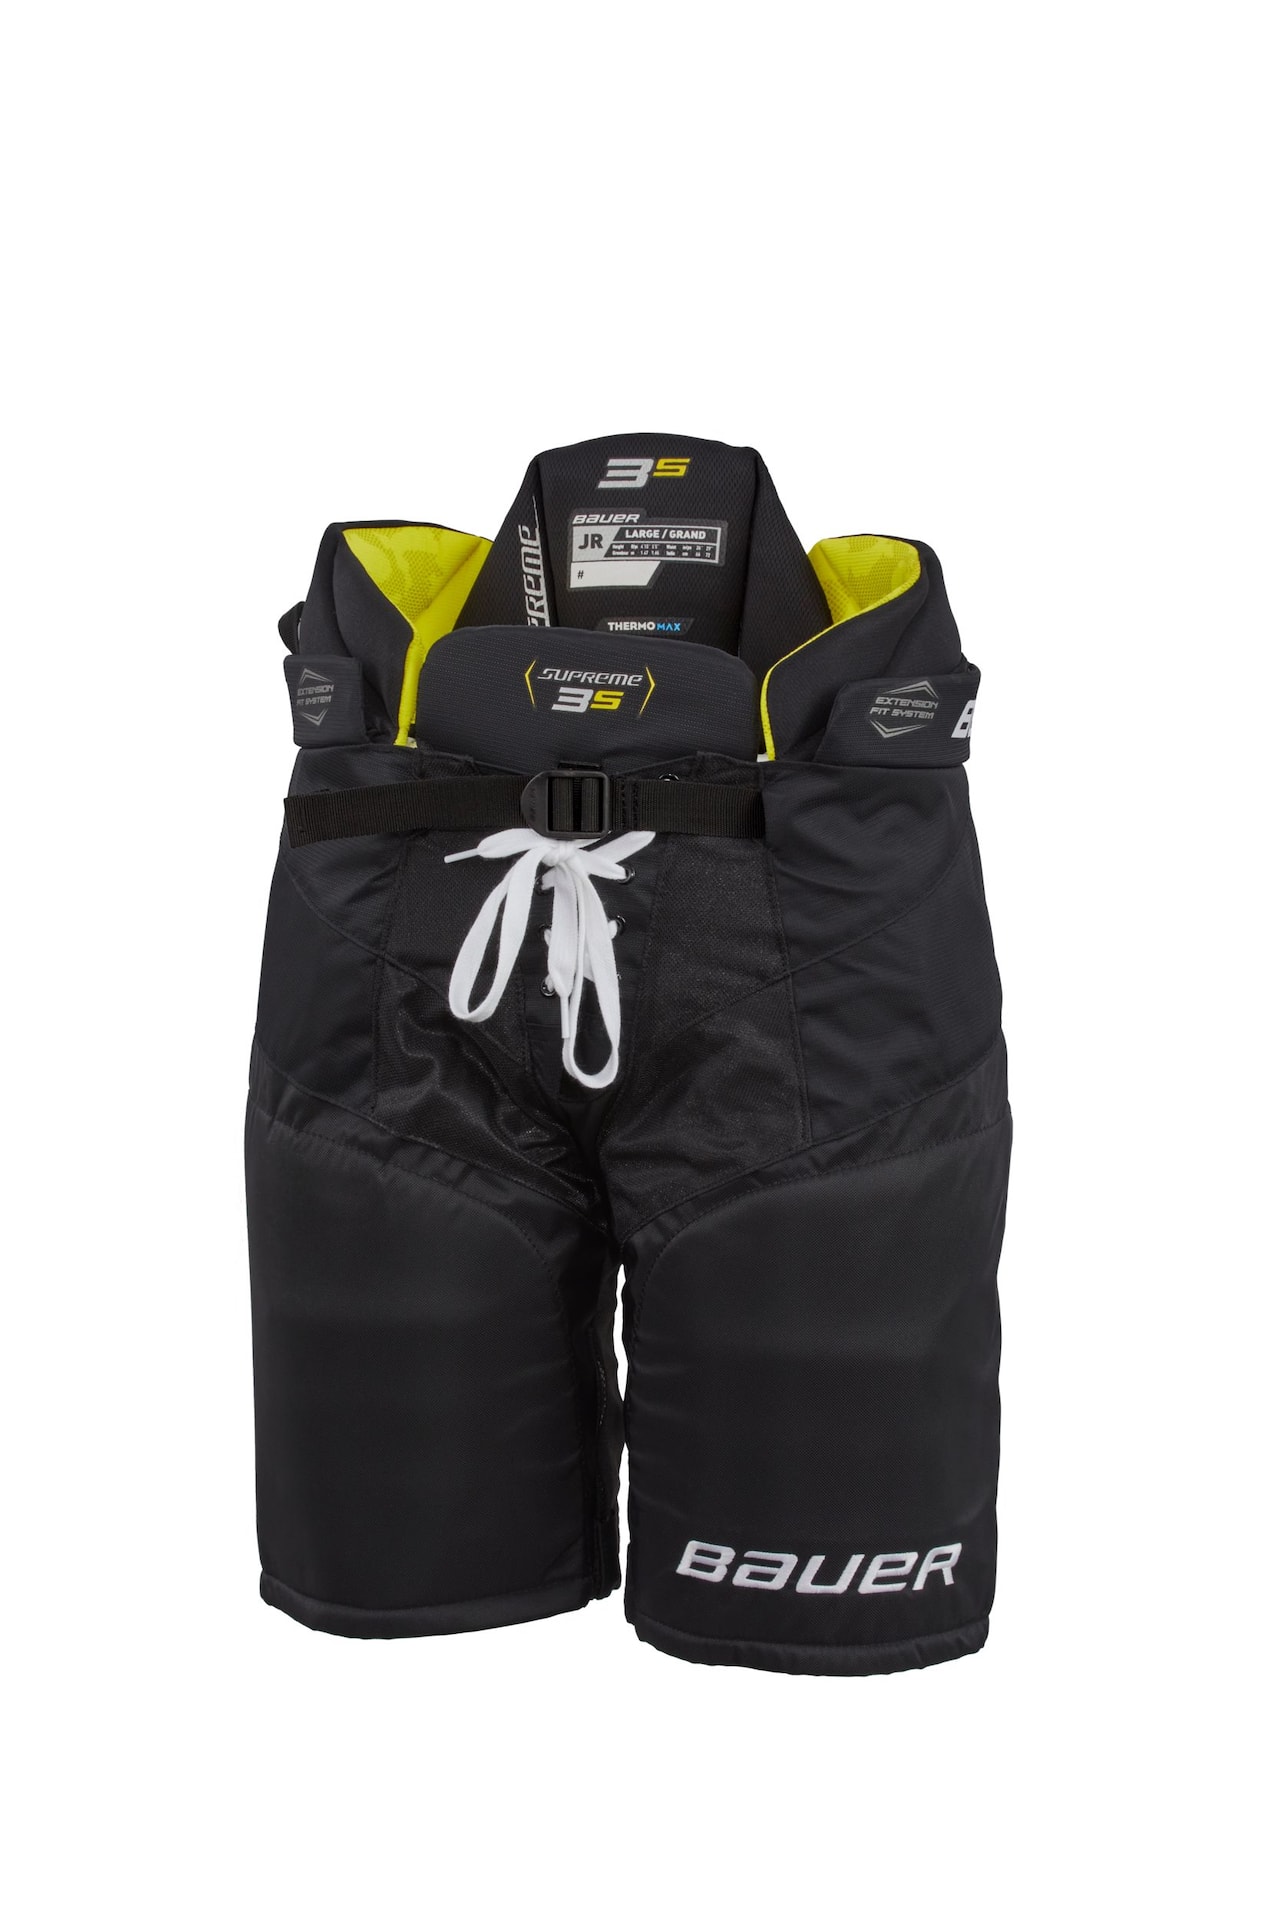 Bauer Supreme 3S Hockey Pants, Senior, Black | Canadian Tire